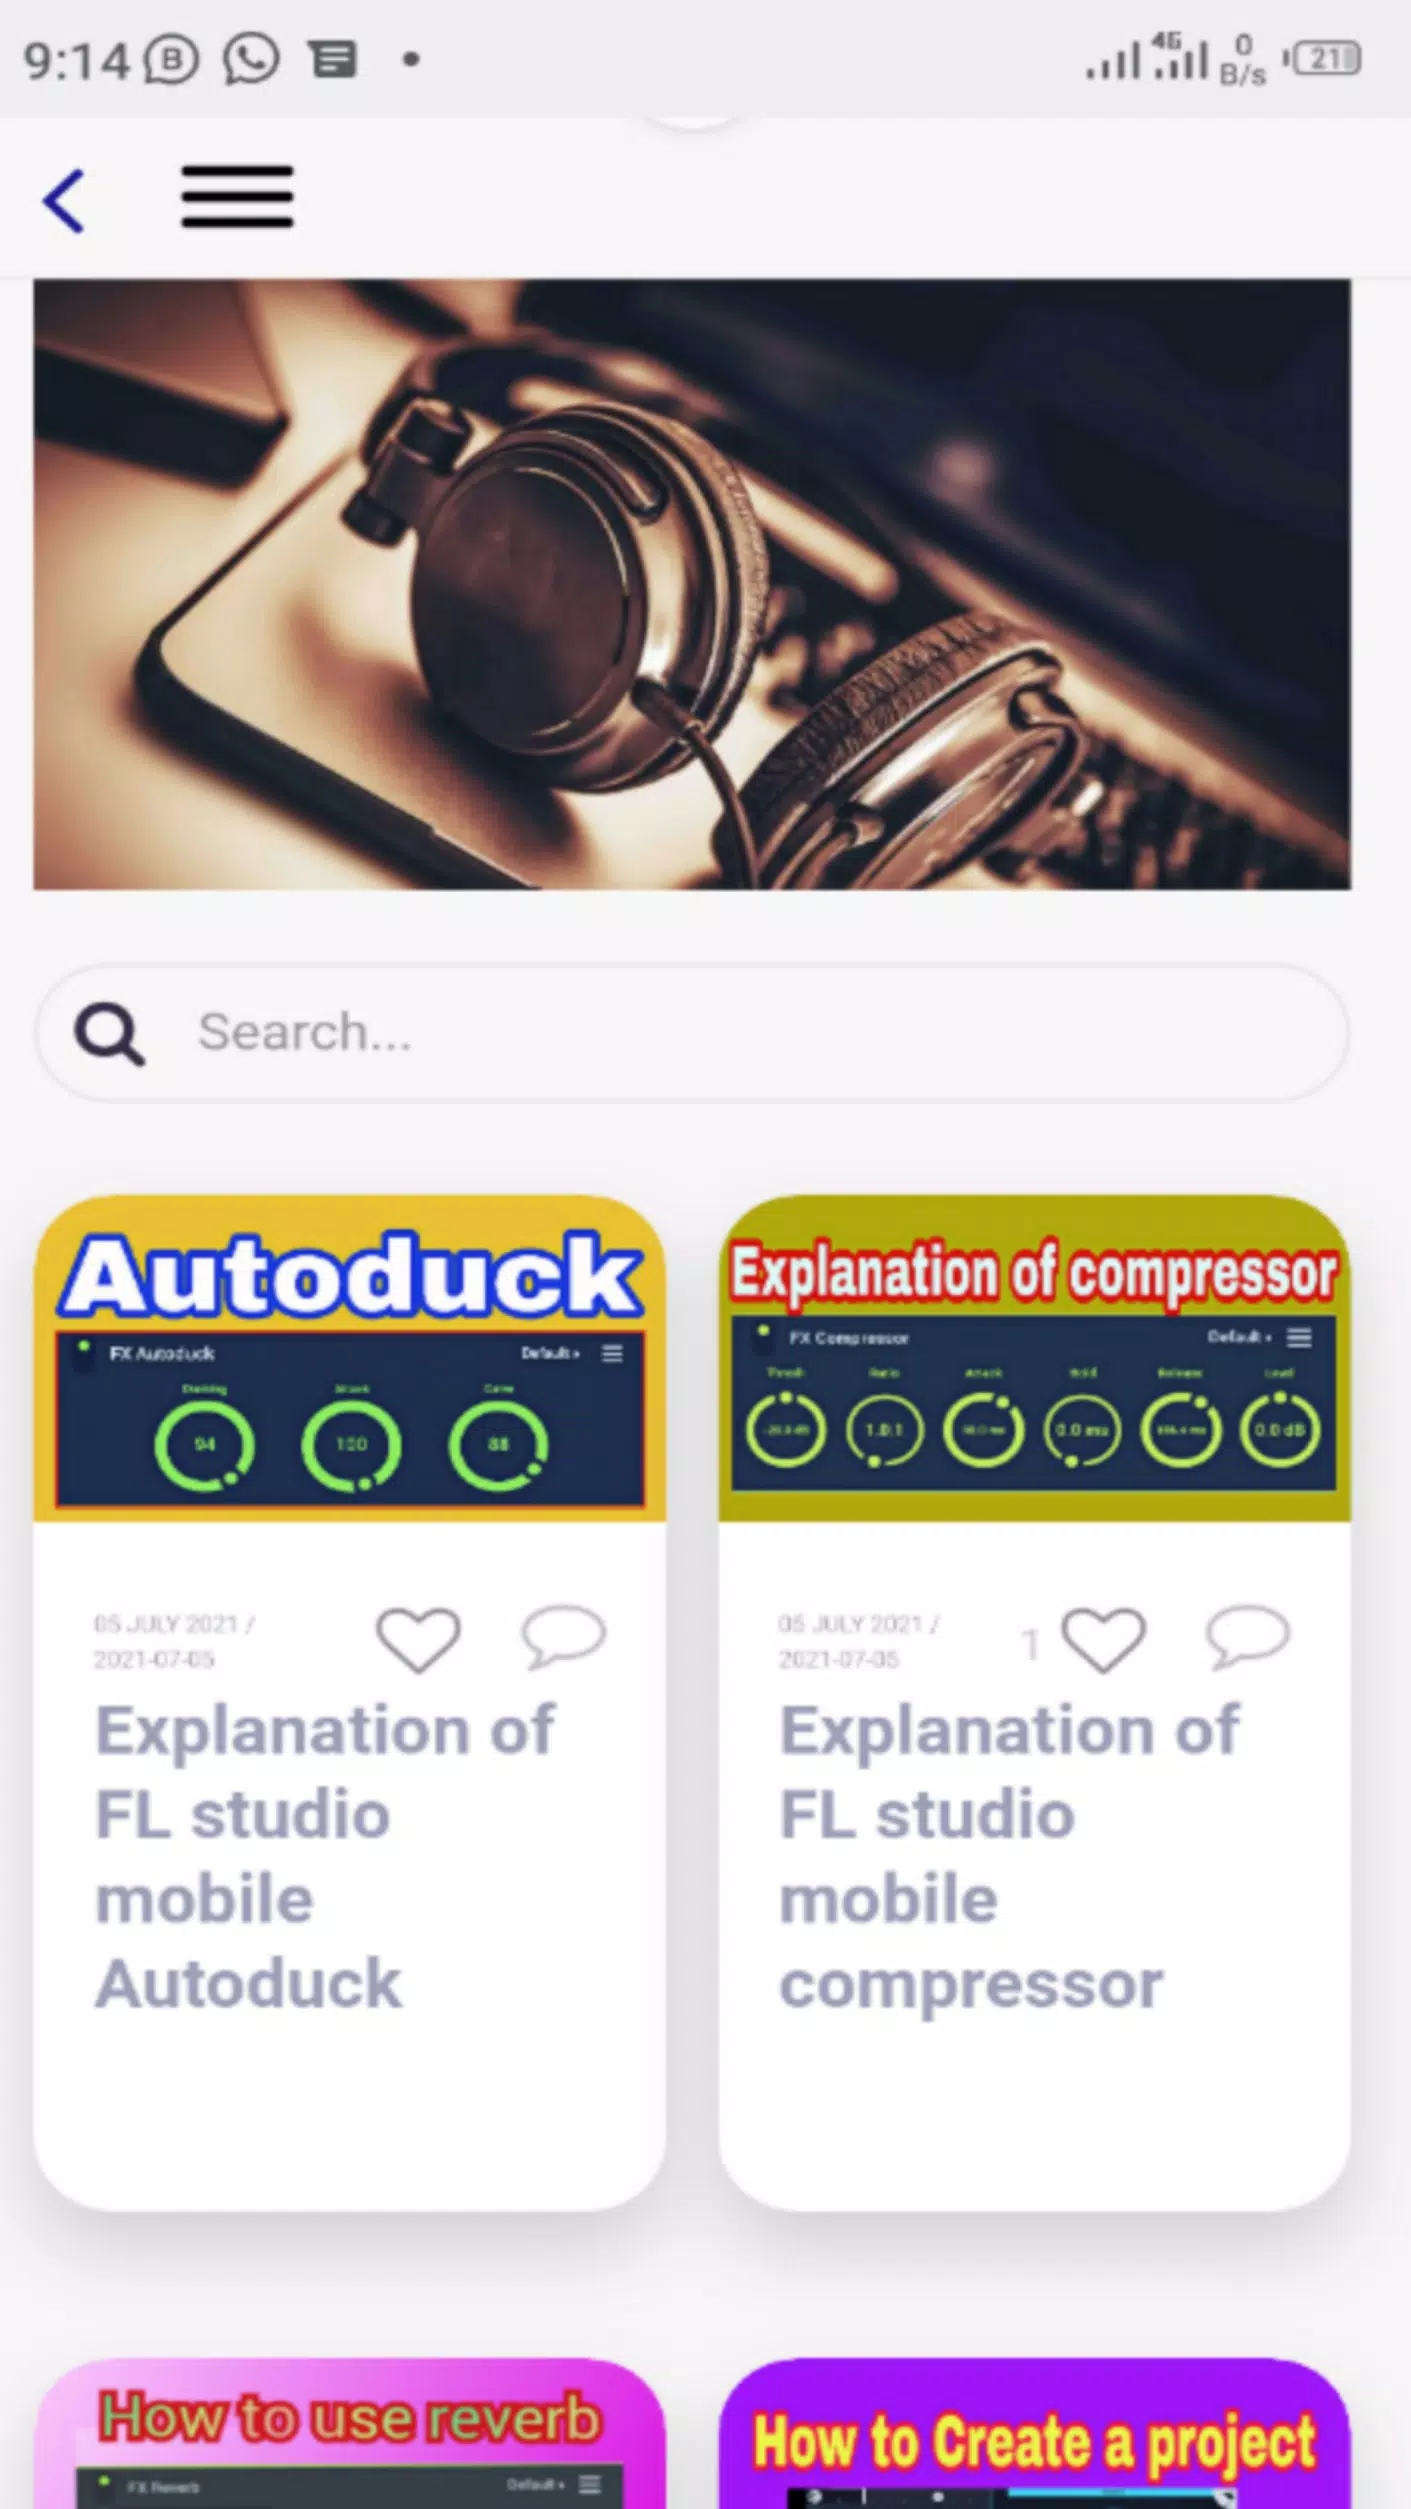 Walkthroug FL Studio 12 Mobile APK for Android Download